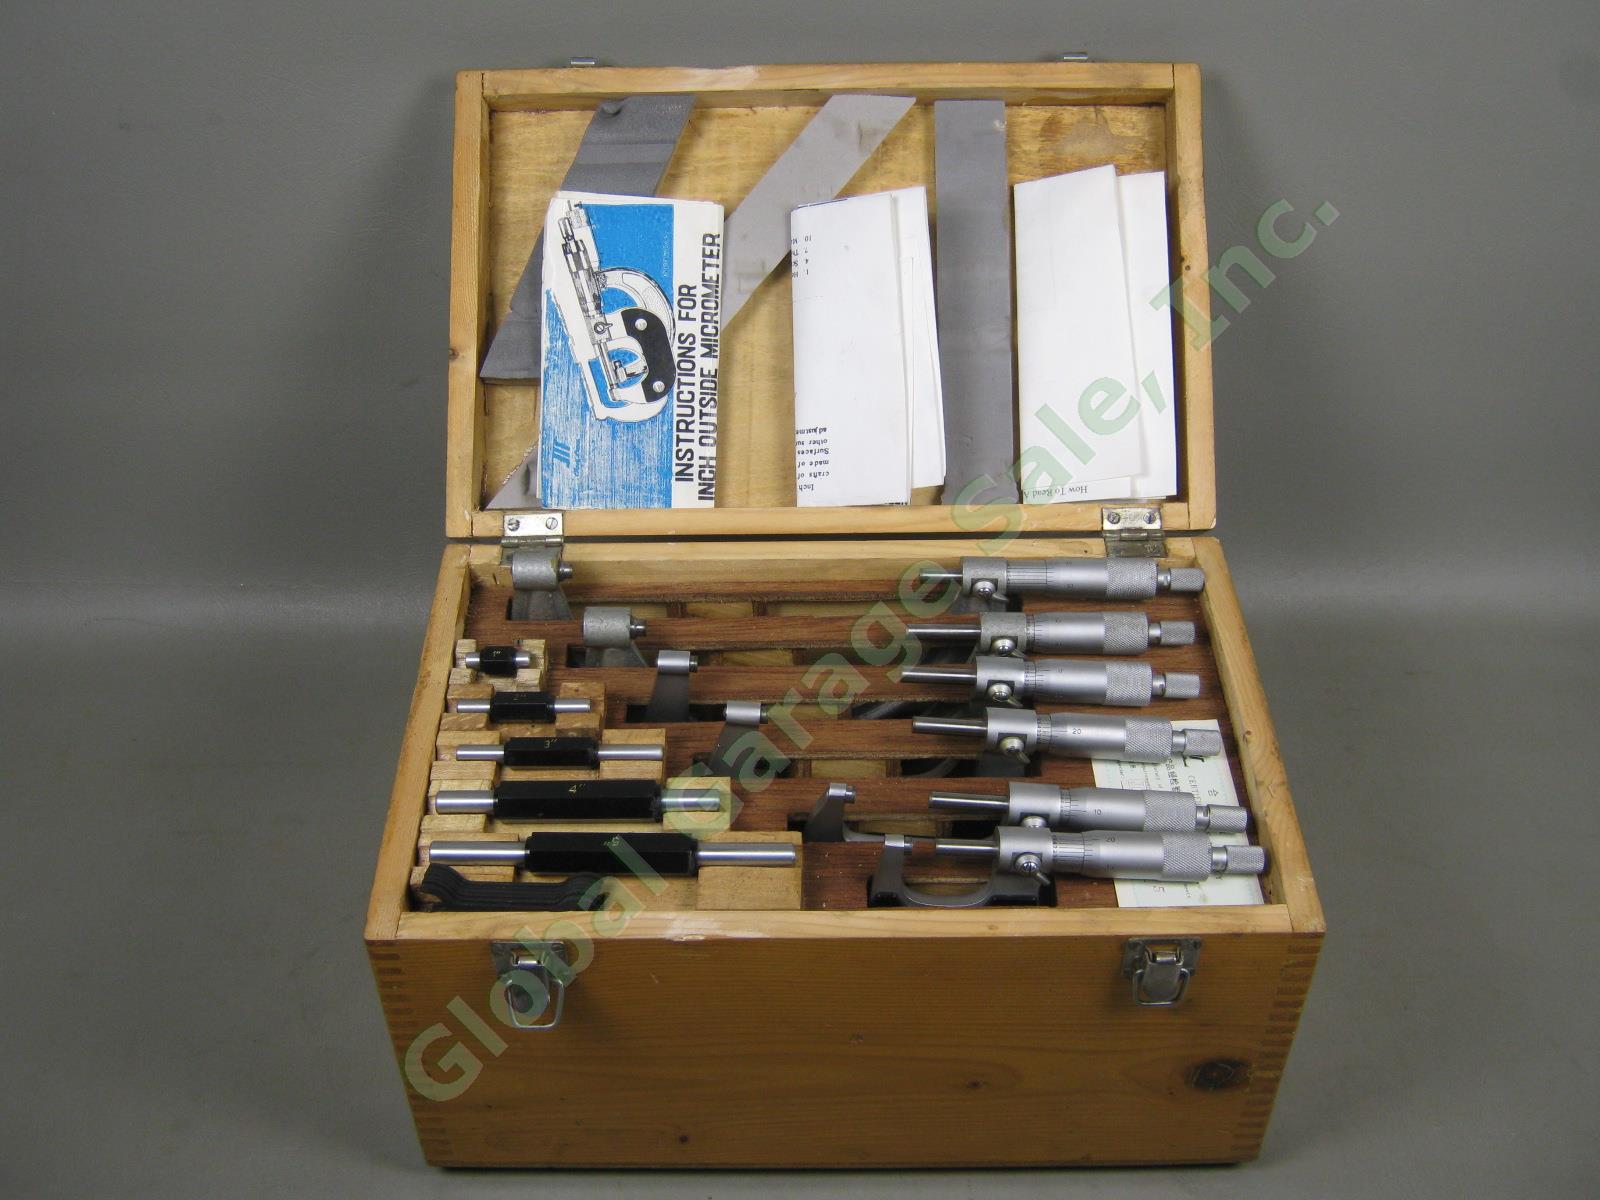 Chuan Brand Outside Micrometer Caliper Set 0-12" in W/ Wood Wooden Storage Case